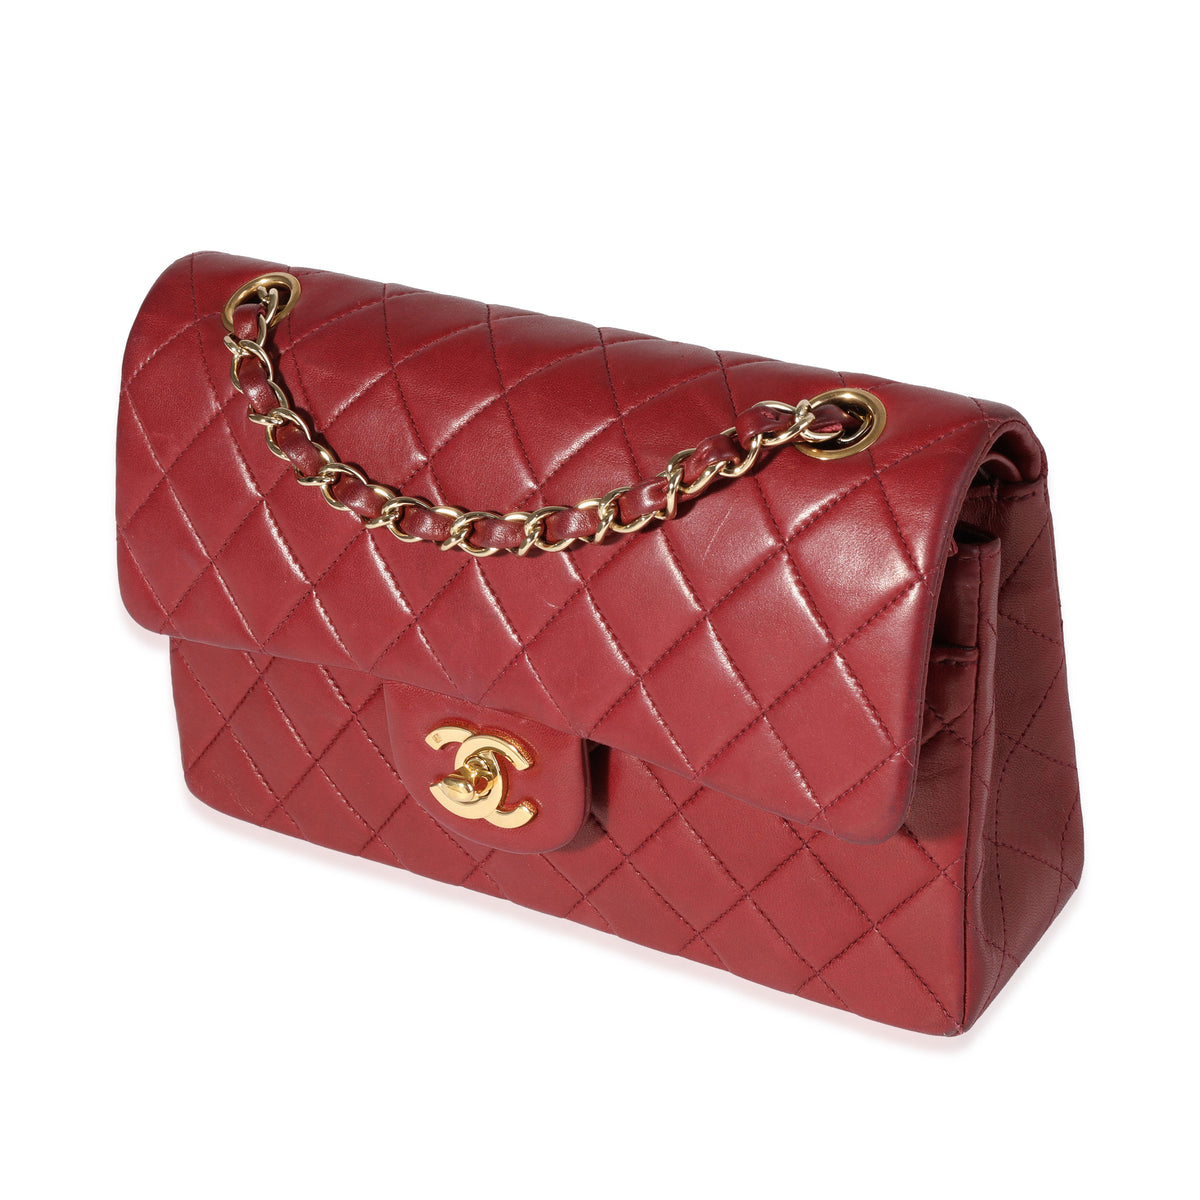 Trendy CC Top Handle leather handbag